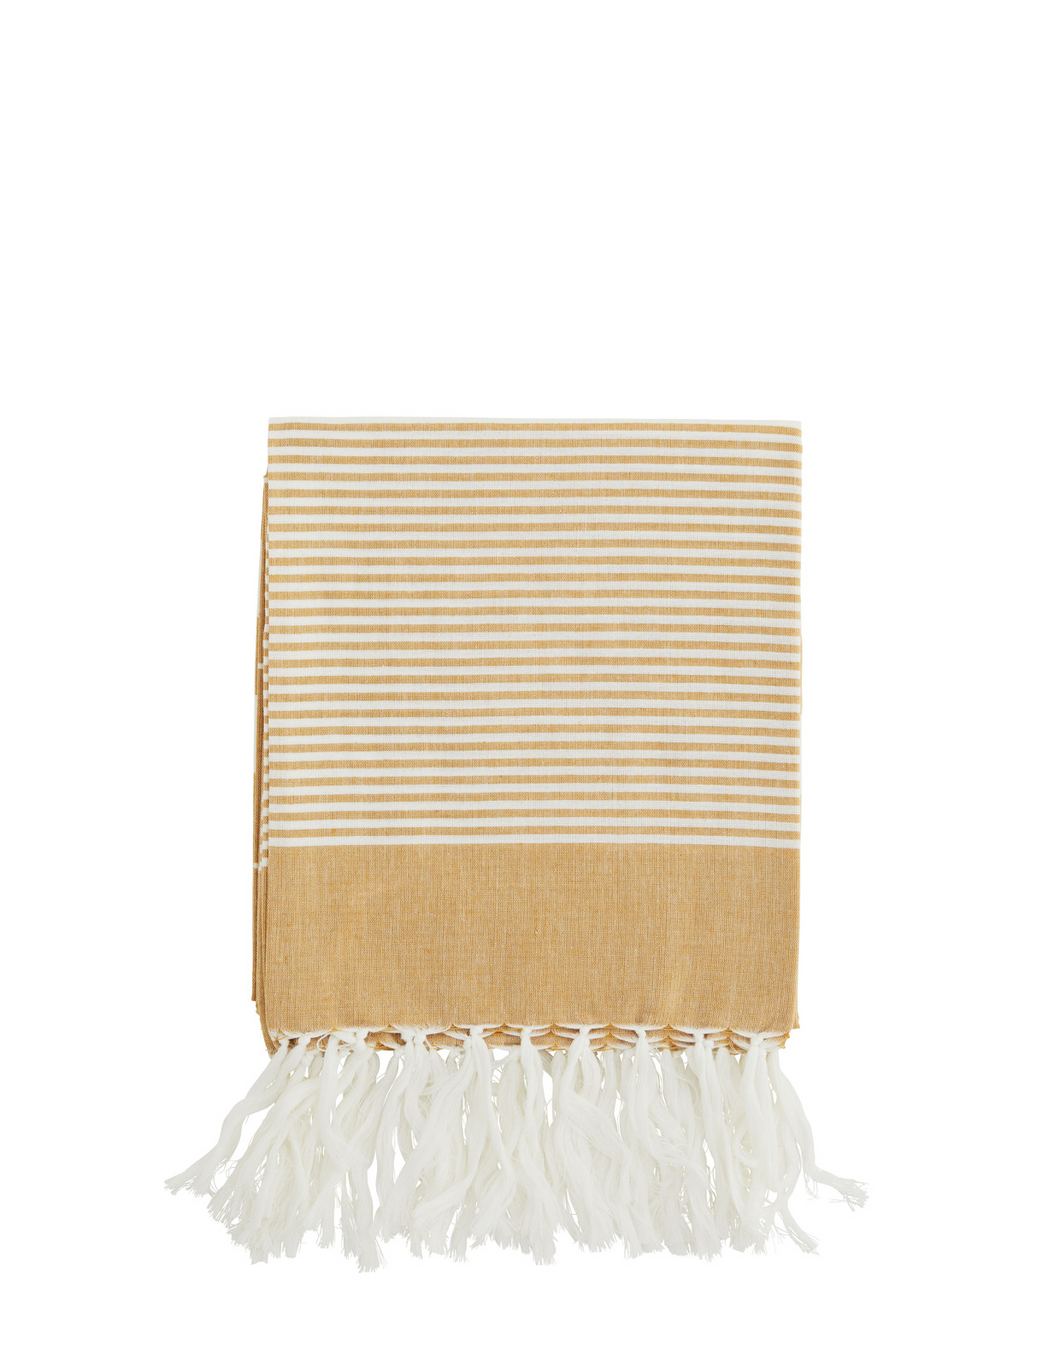 Honey & white striped hammam towel